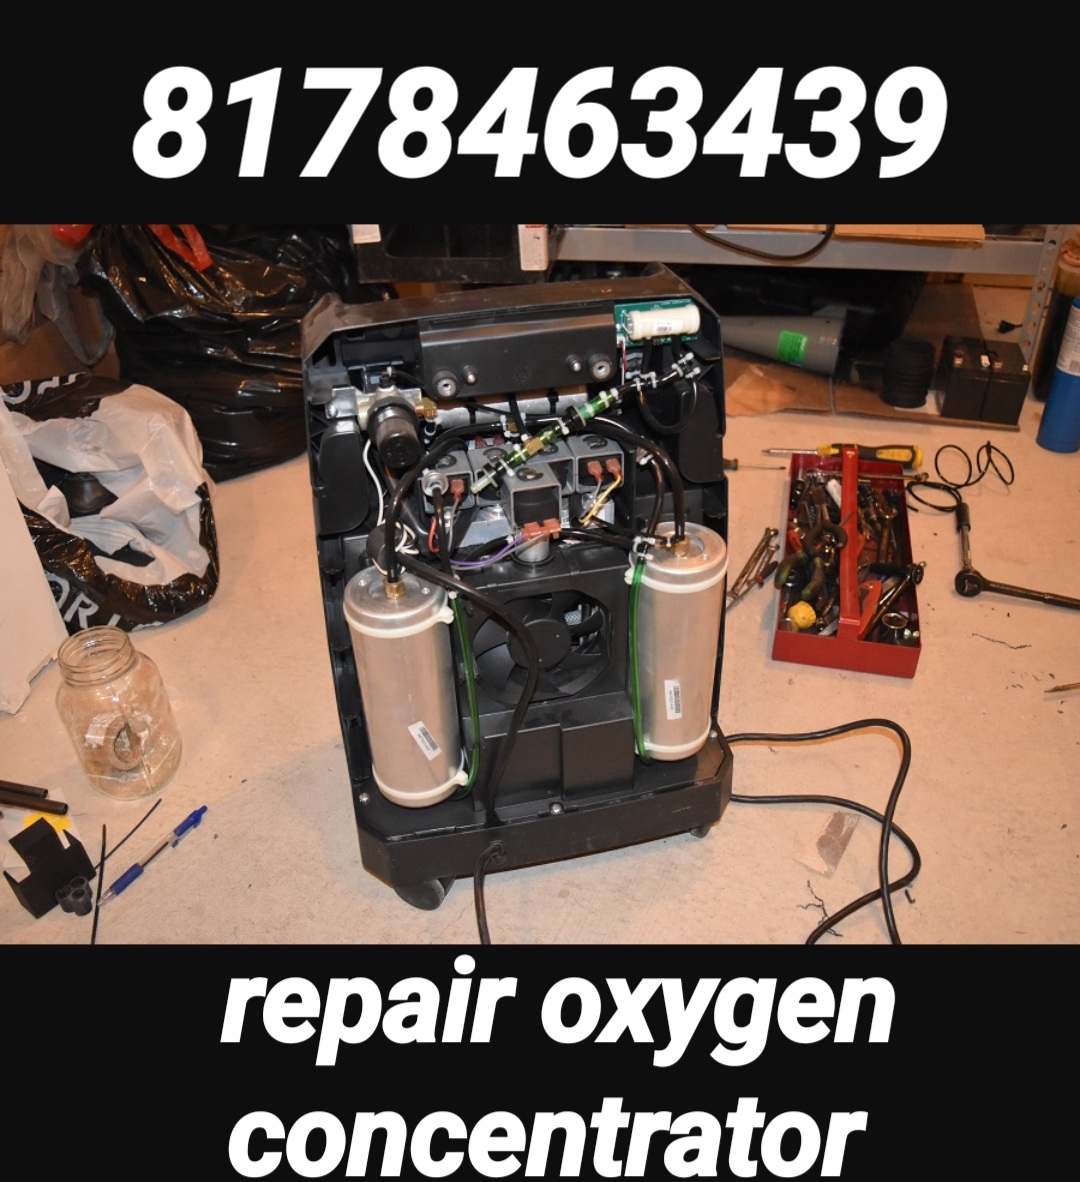 OXYGEN MACHINE REPAIR IN NOIDA 8178463439